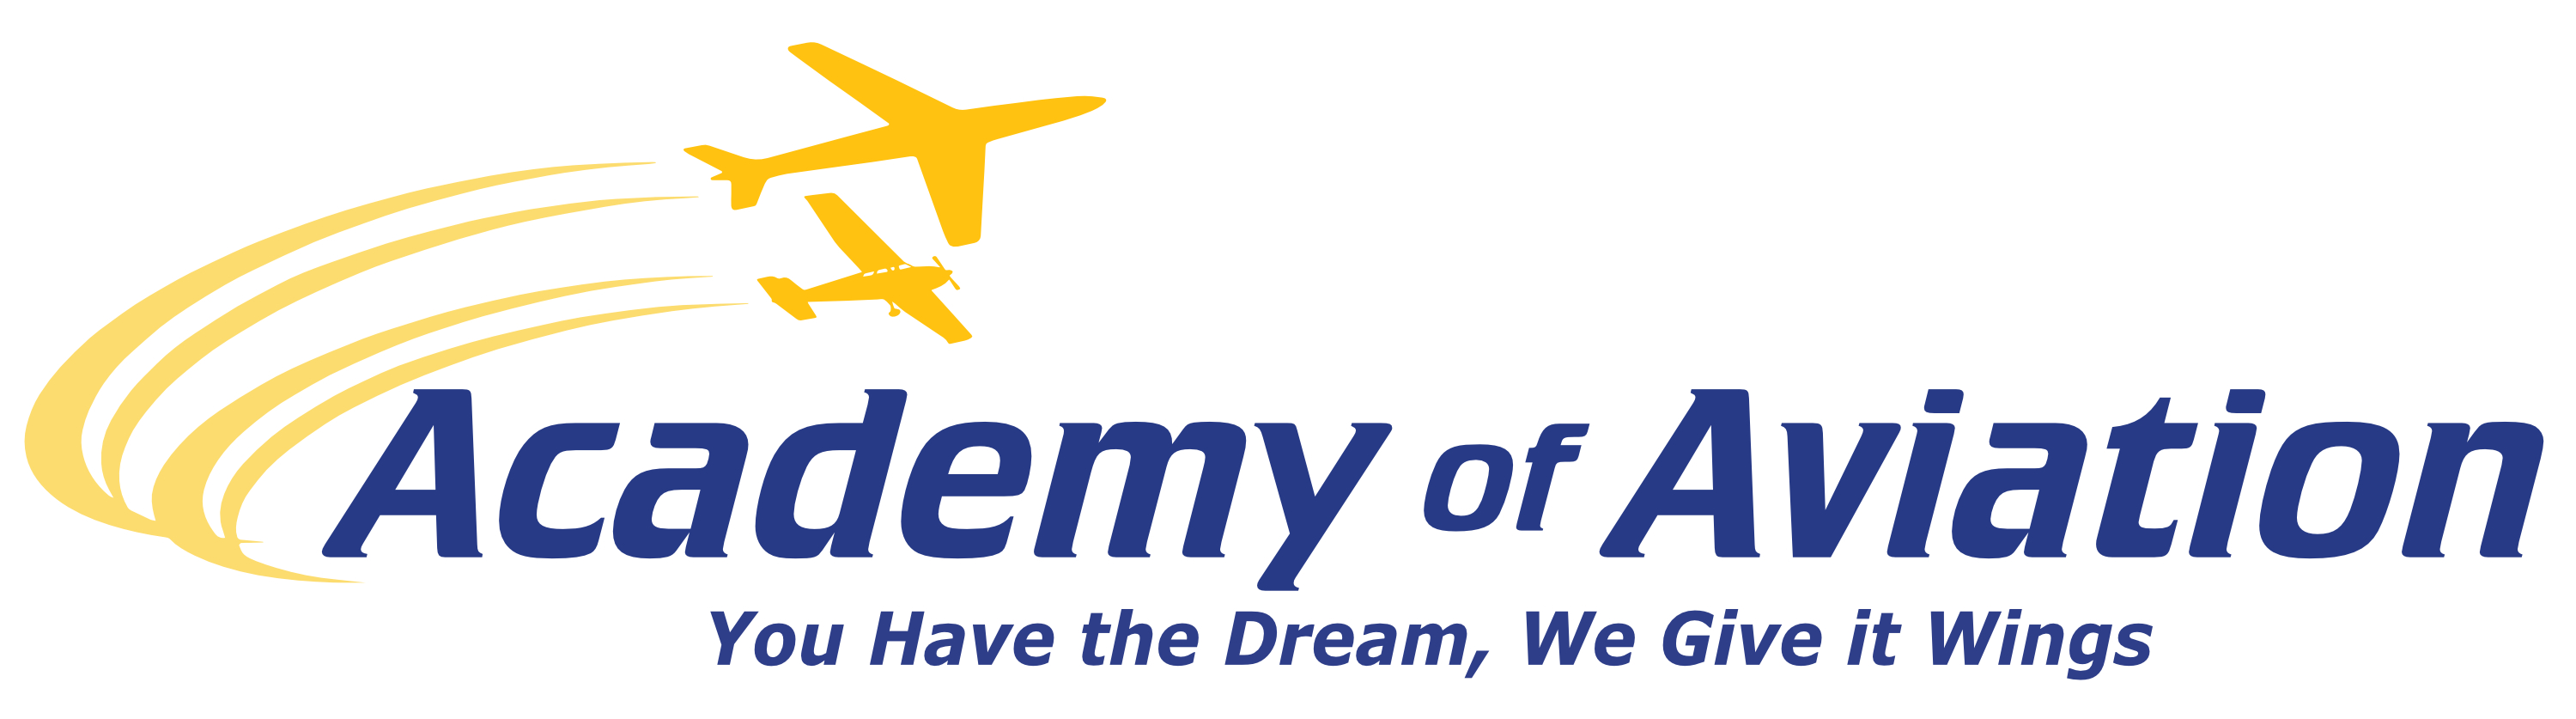 Academy of Aviation Flight School - Contact